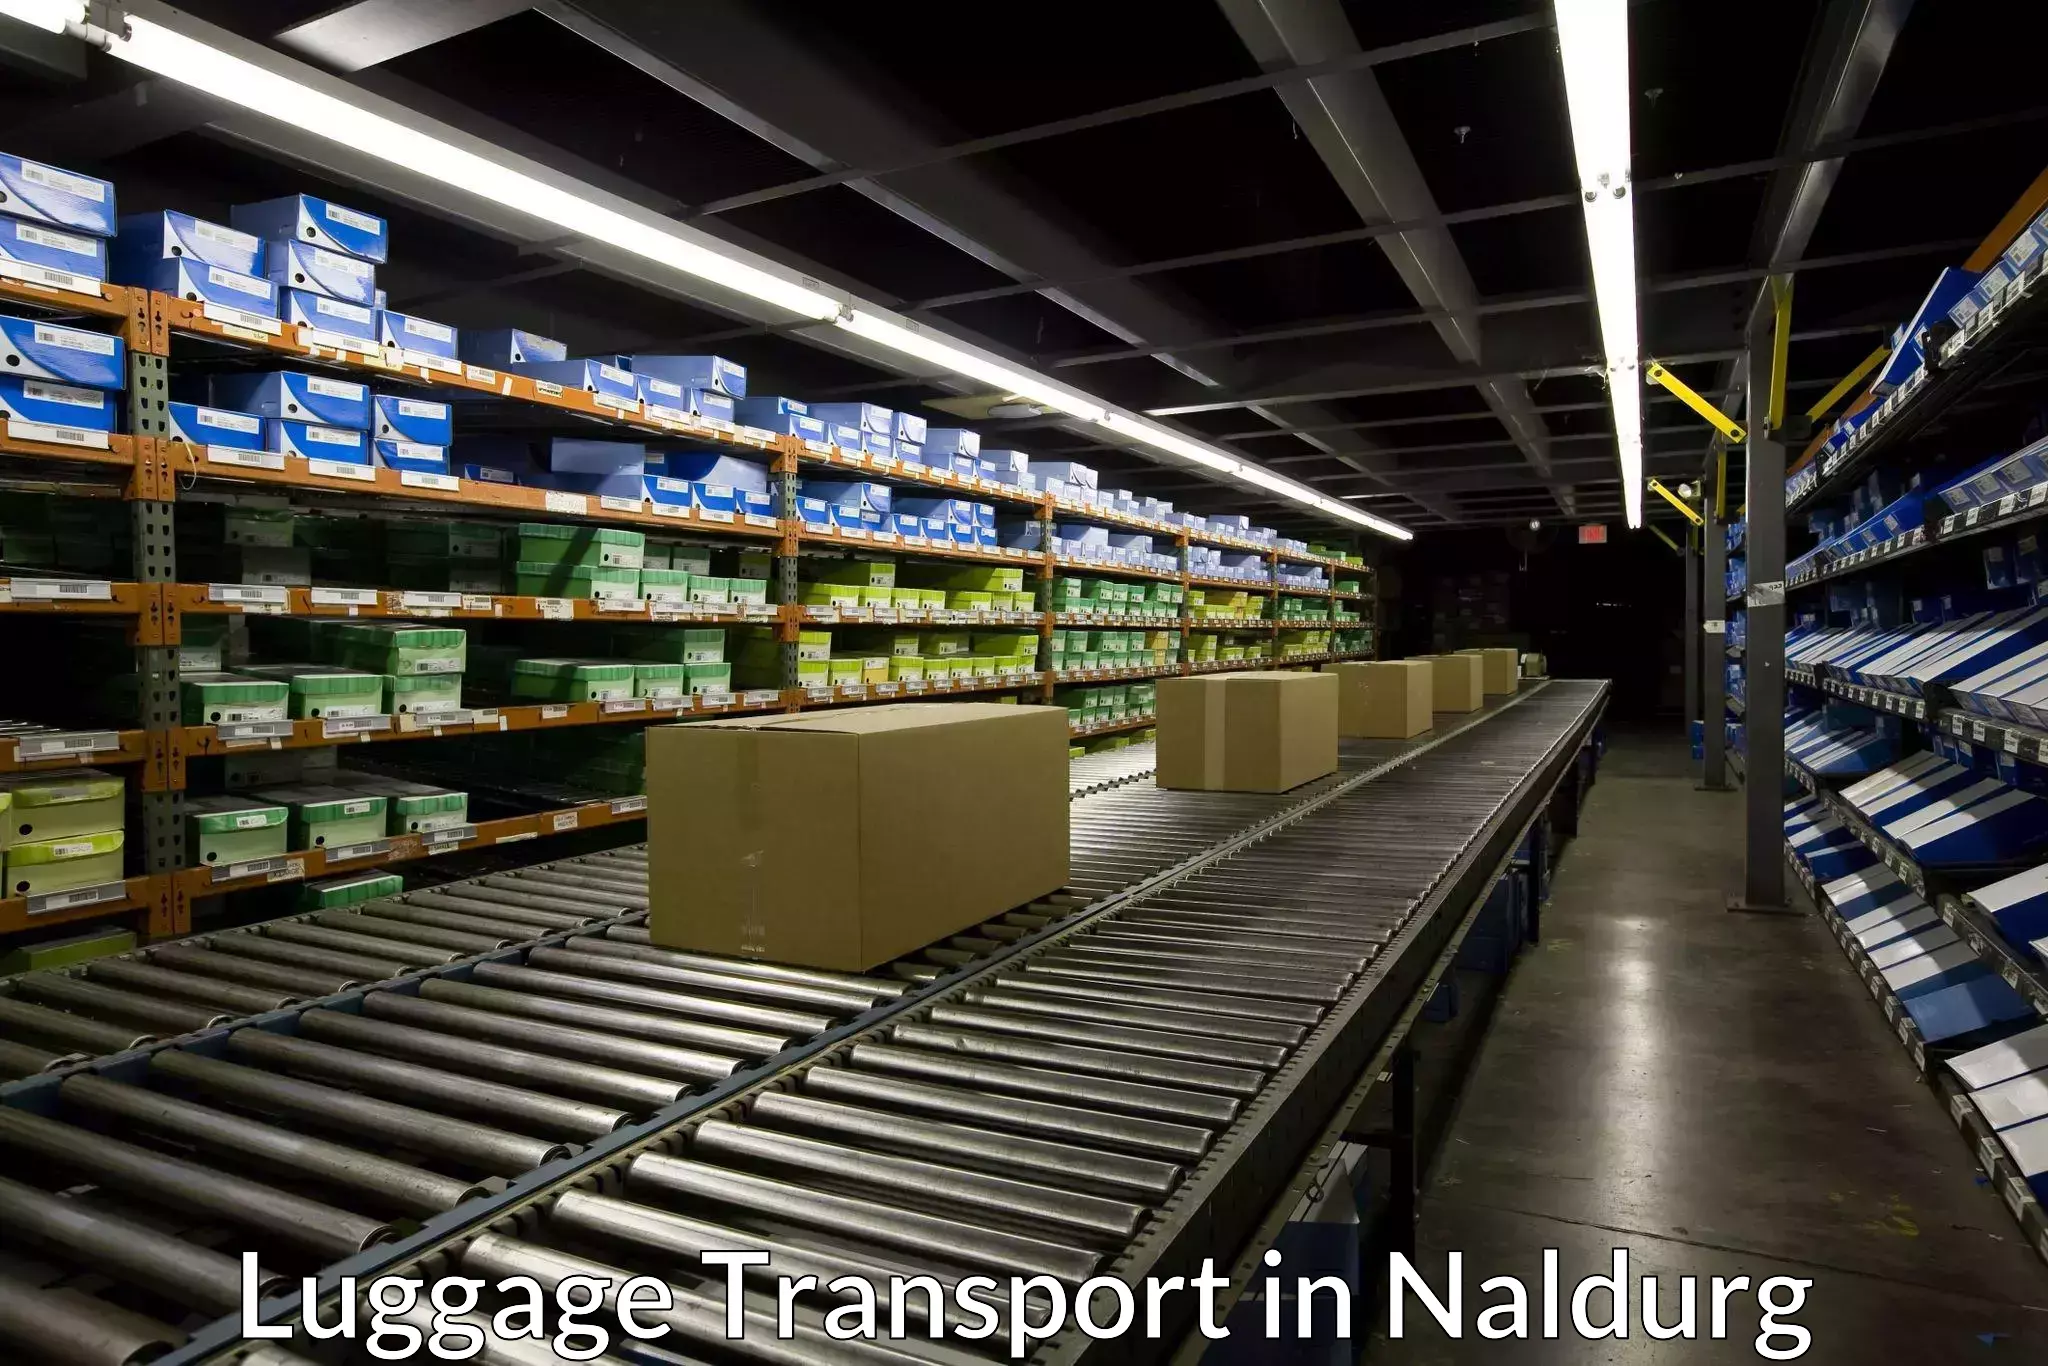 Baggage transport technology in Naldurg